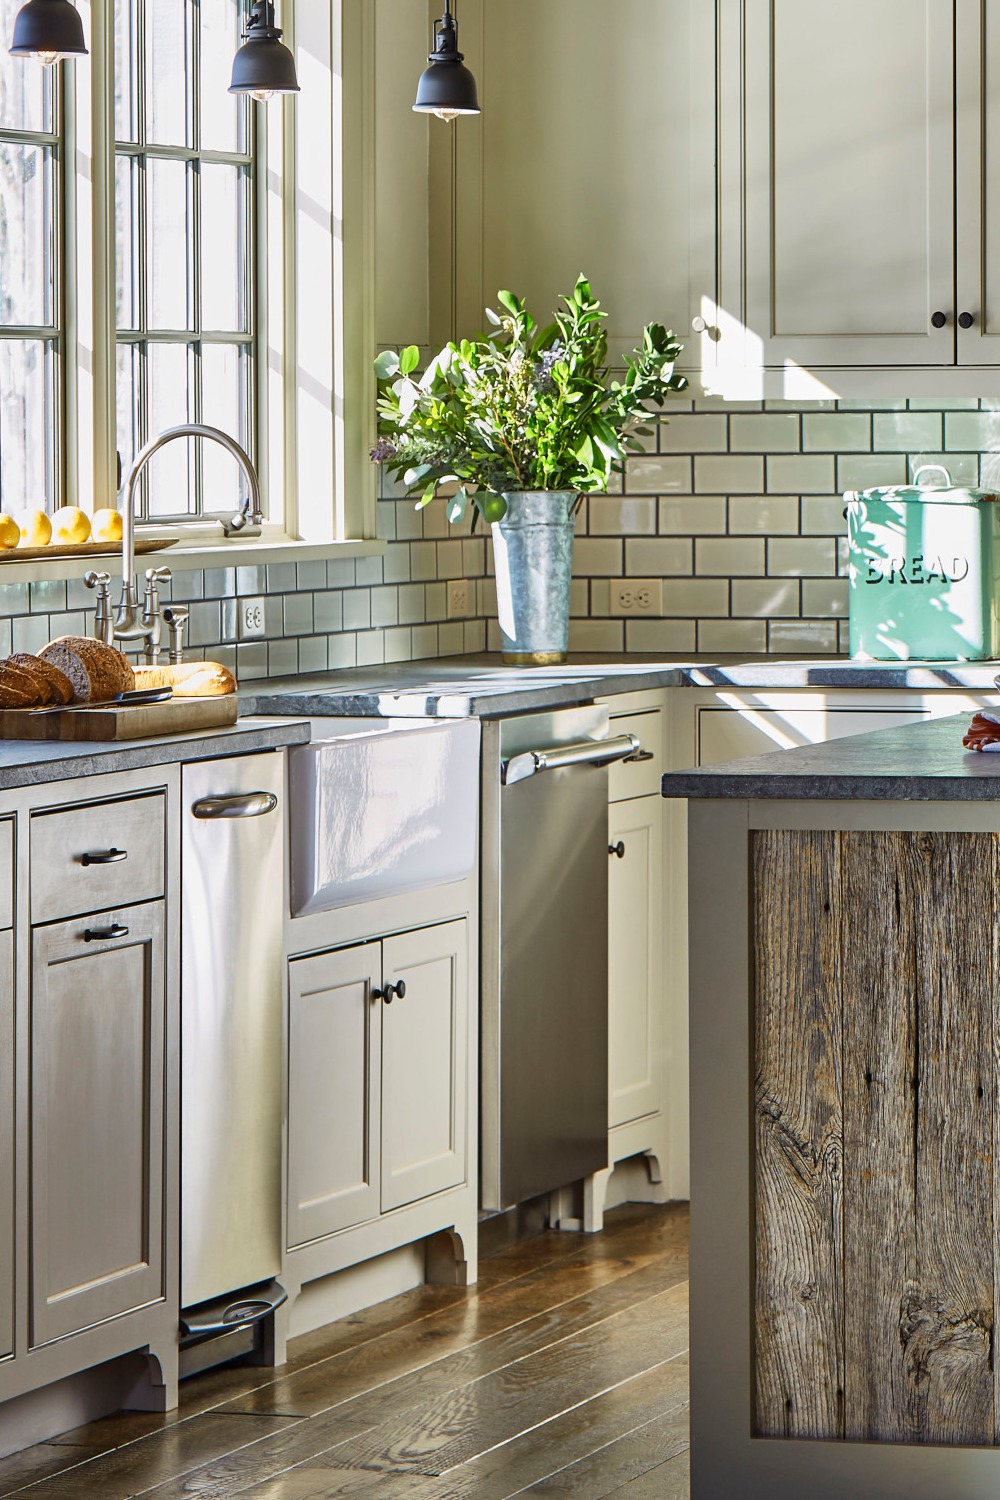 Granite Countertops Beige Backsplash Dining Table Brown Floor Rustic Kitchens Natural Elements Detailed Quote Vintage